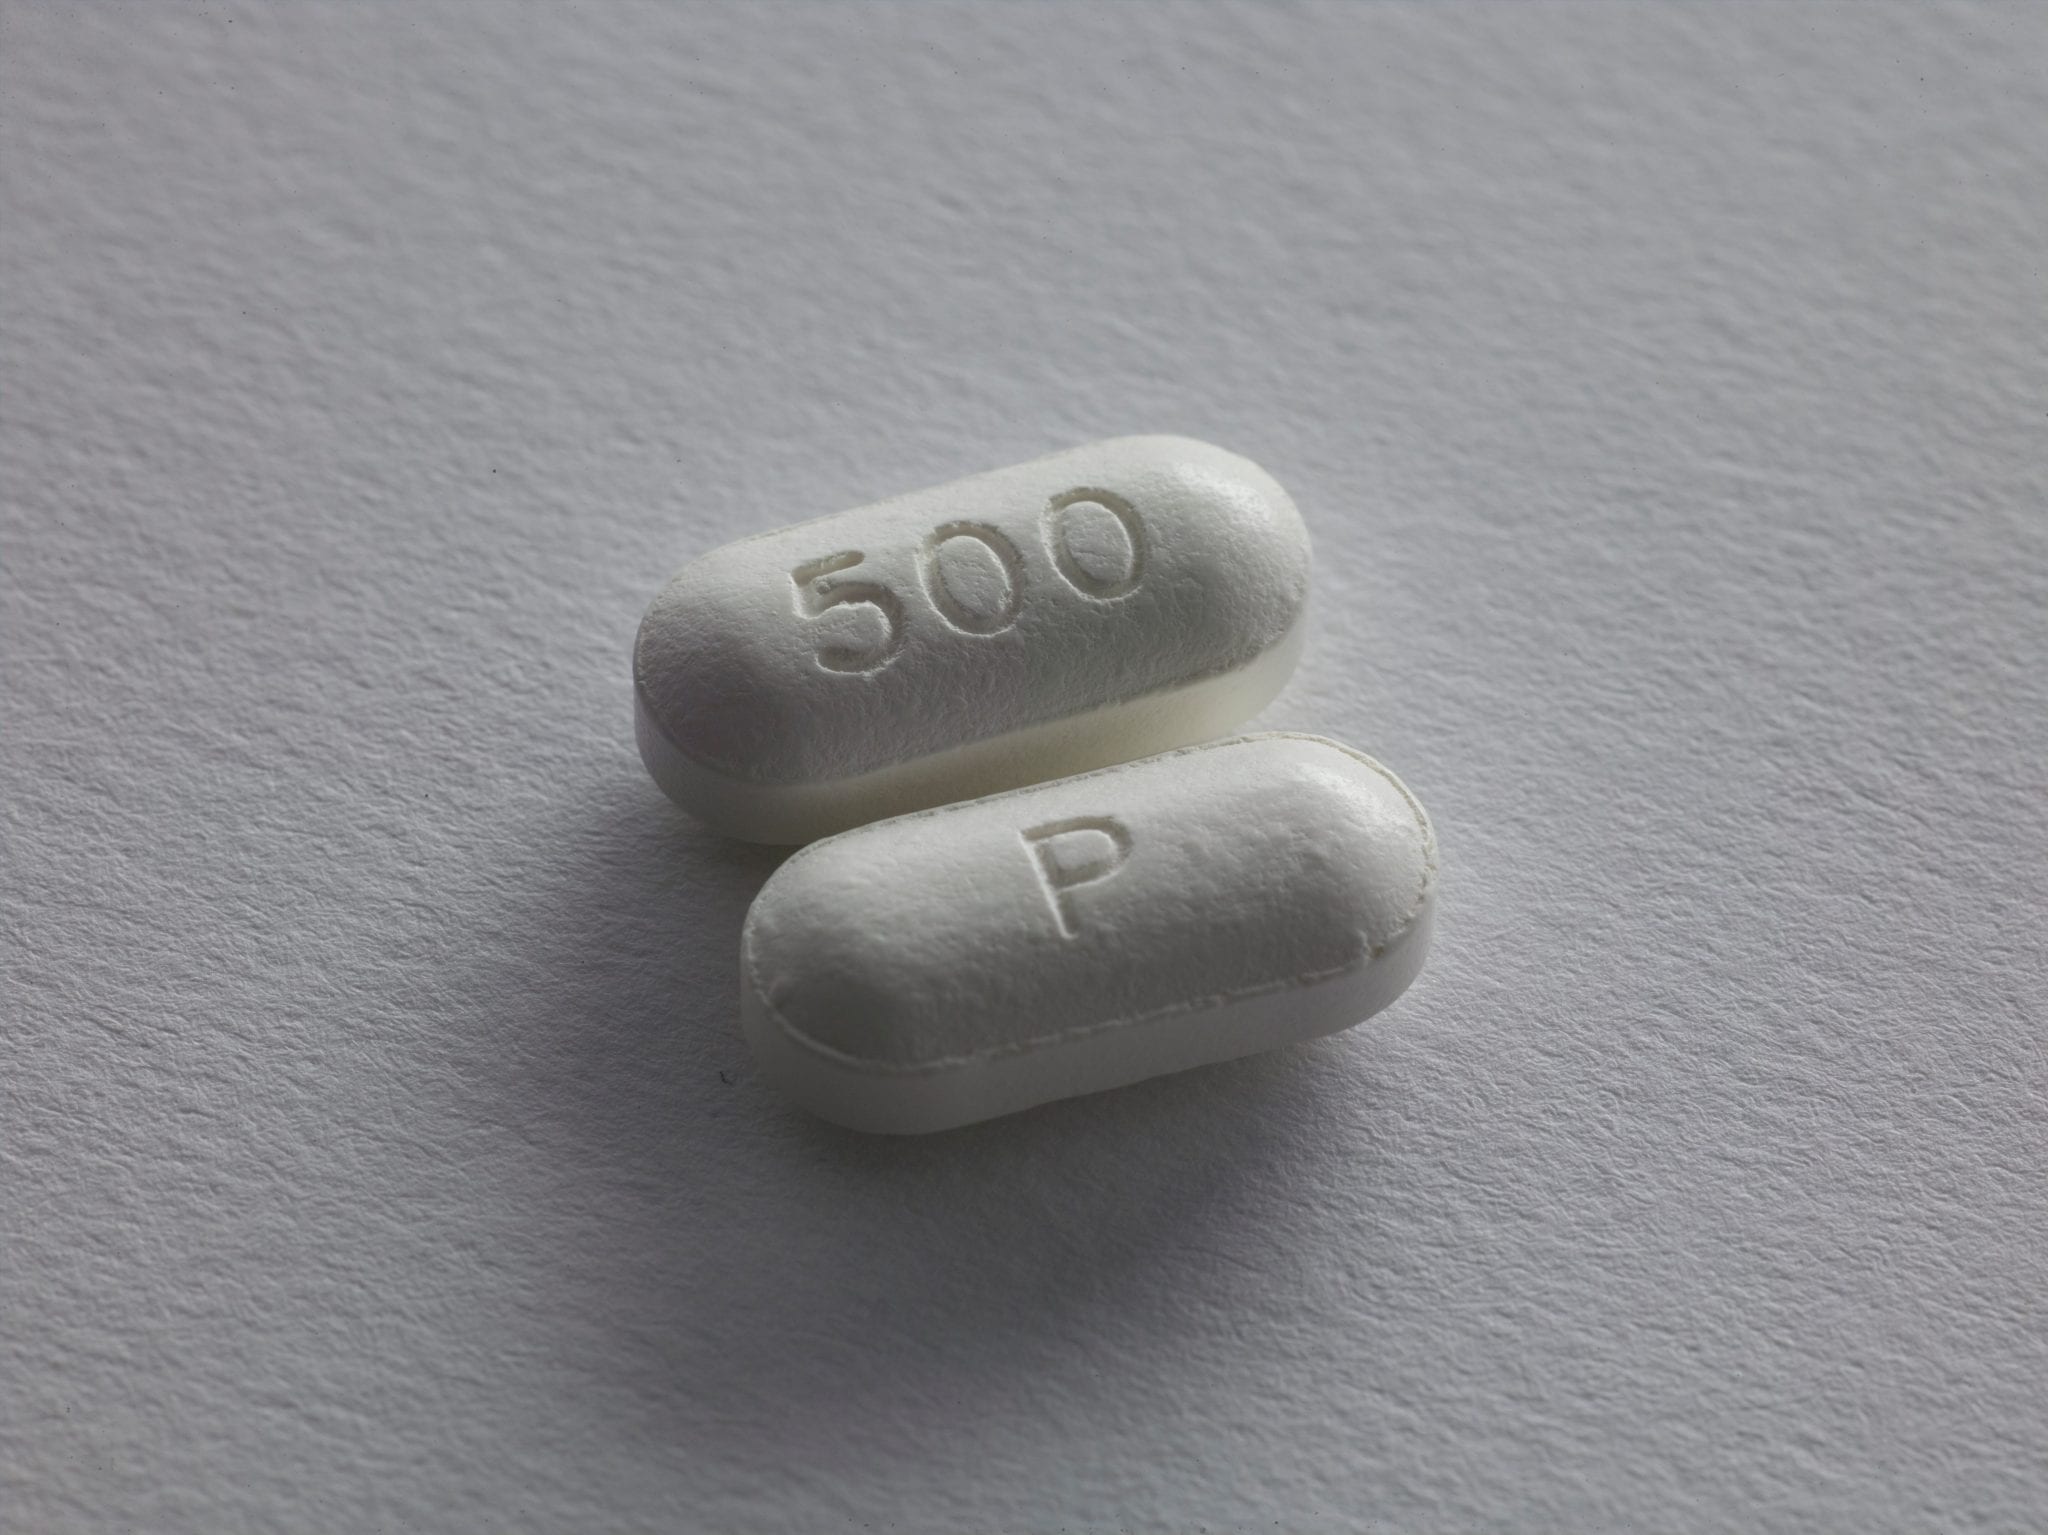 Vermont Files Lawsuit Against Opioid Manufacturer Purdue Pharma